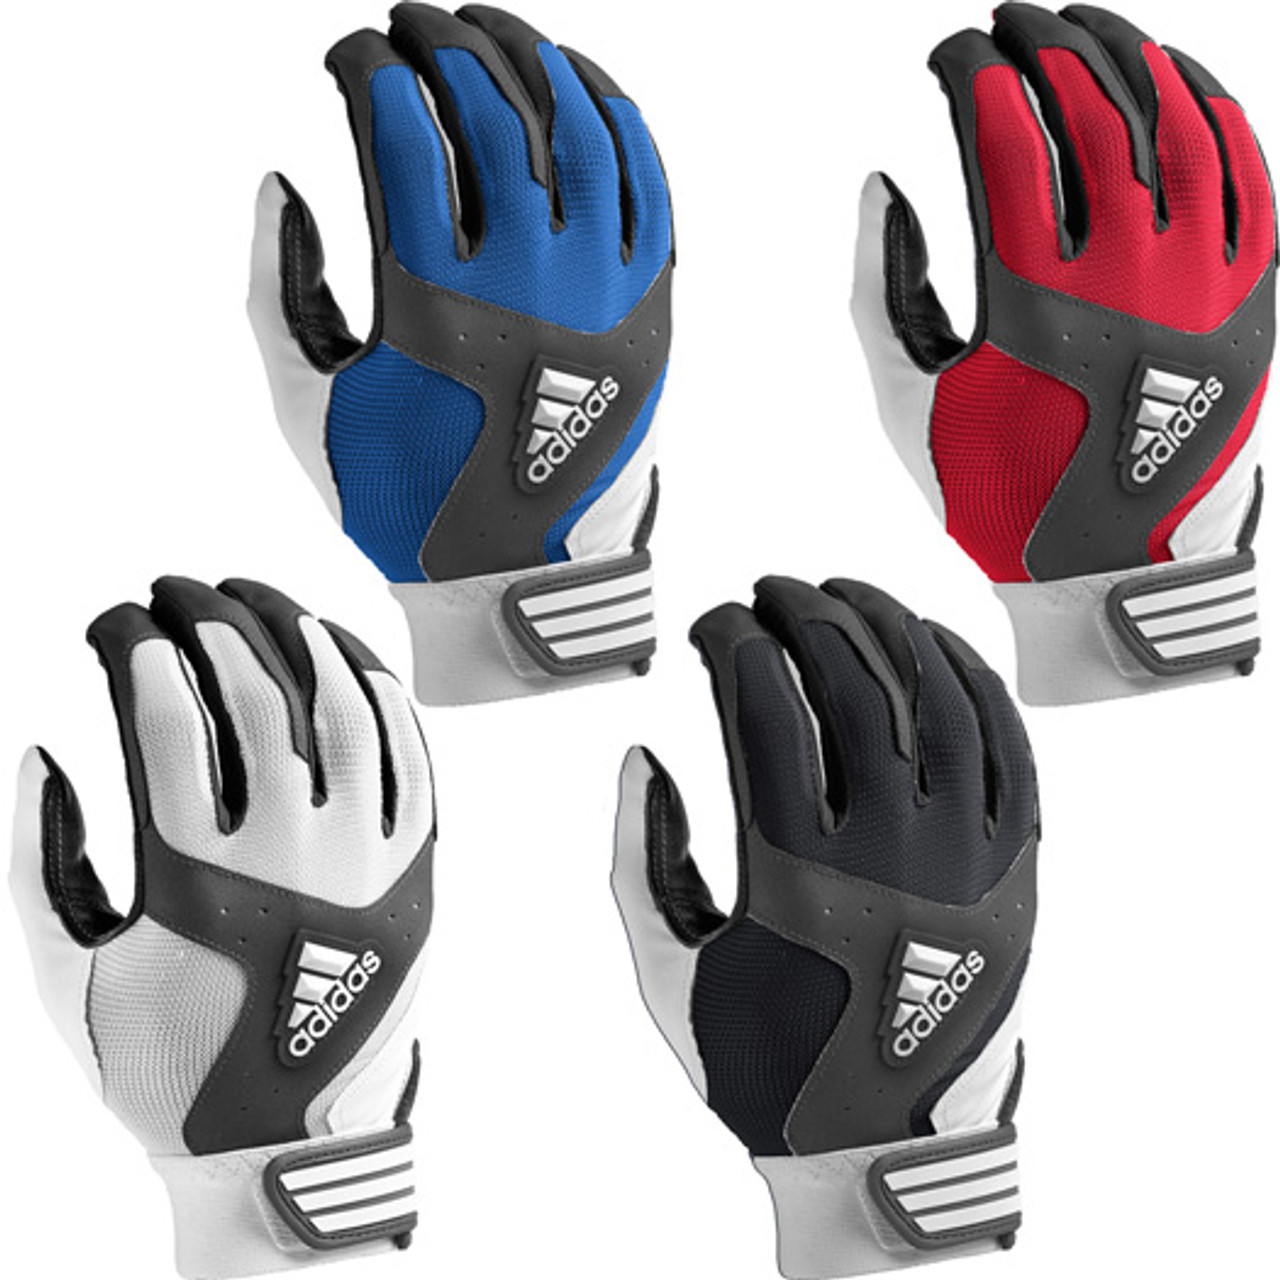 adidas batting gloves